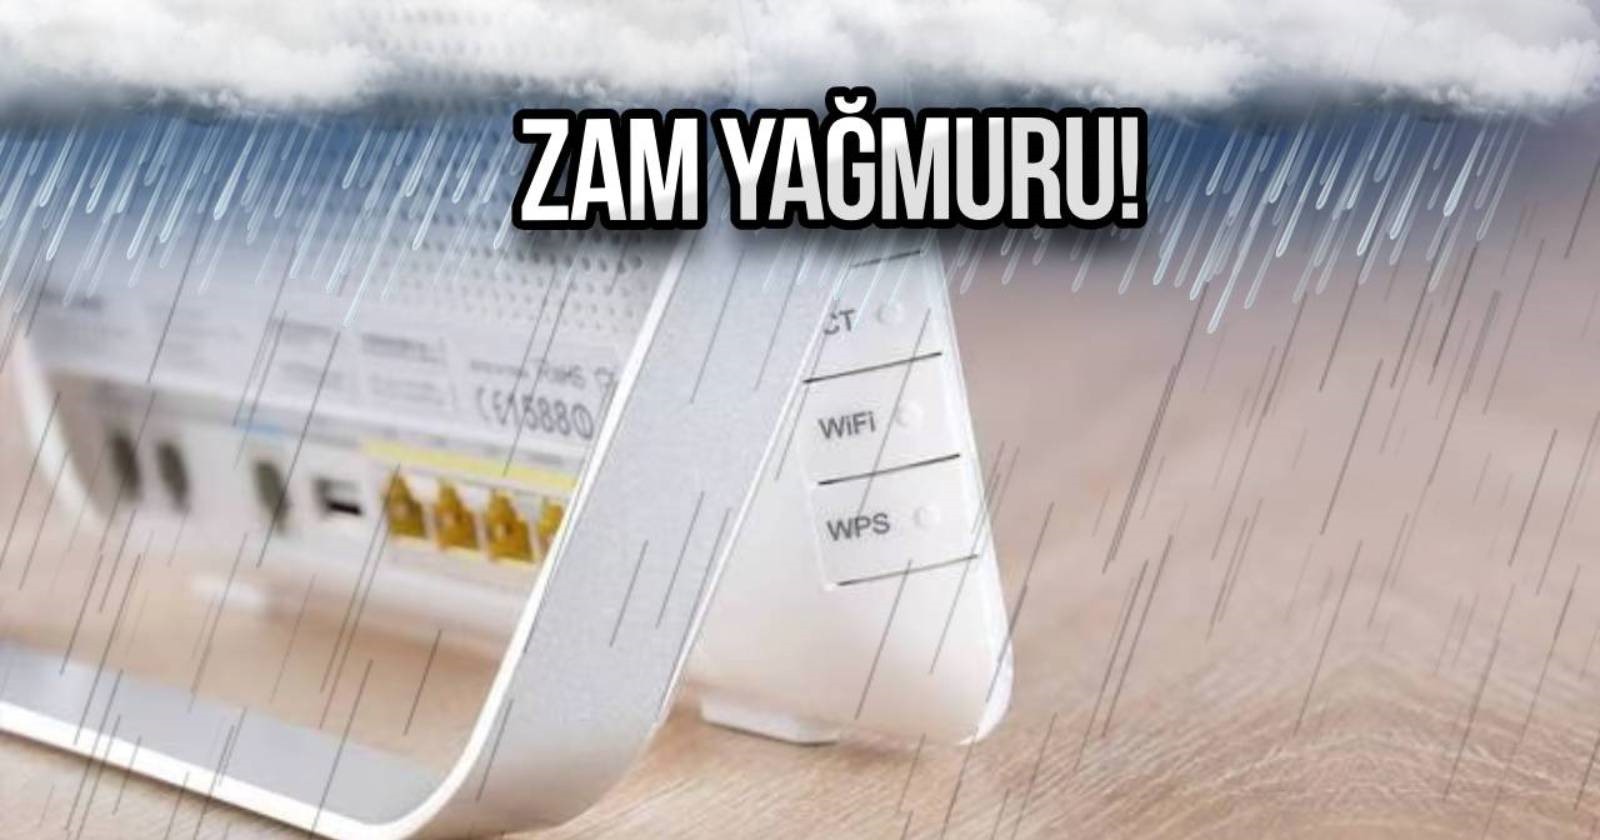 turk-telekom-acikladi-internete-dev-zam-geldi.jpeg